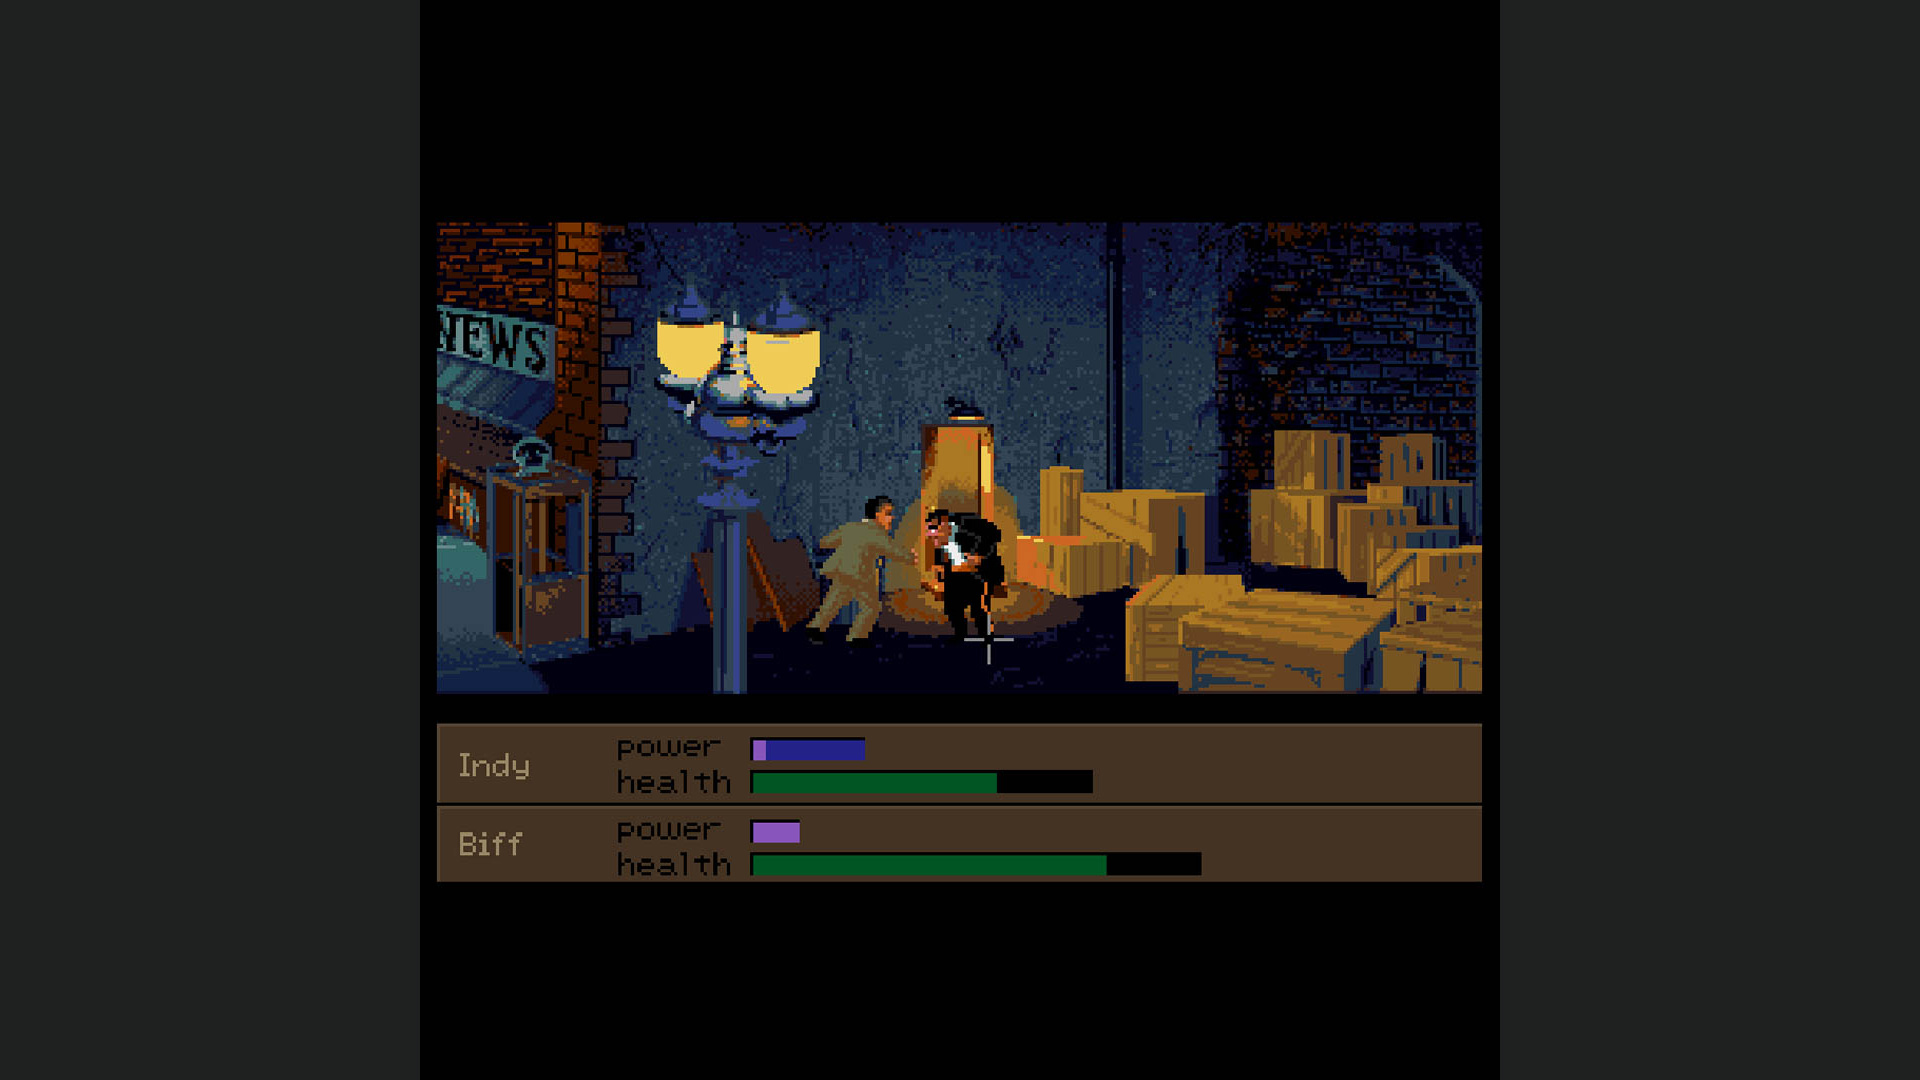 A gameplay screenshot of Indiana Jones and the Fate of Atlantis